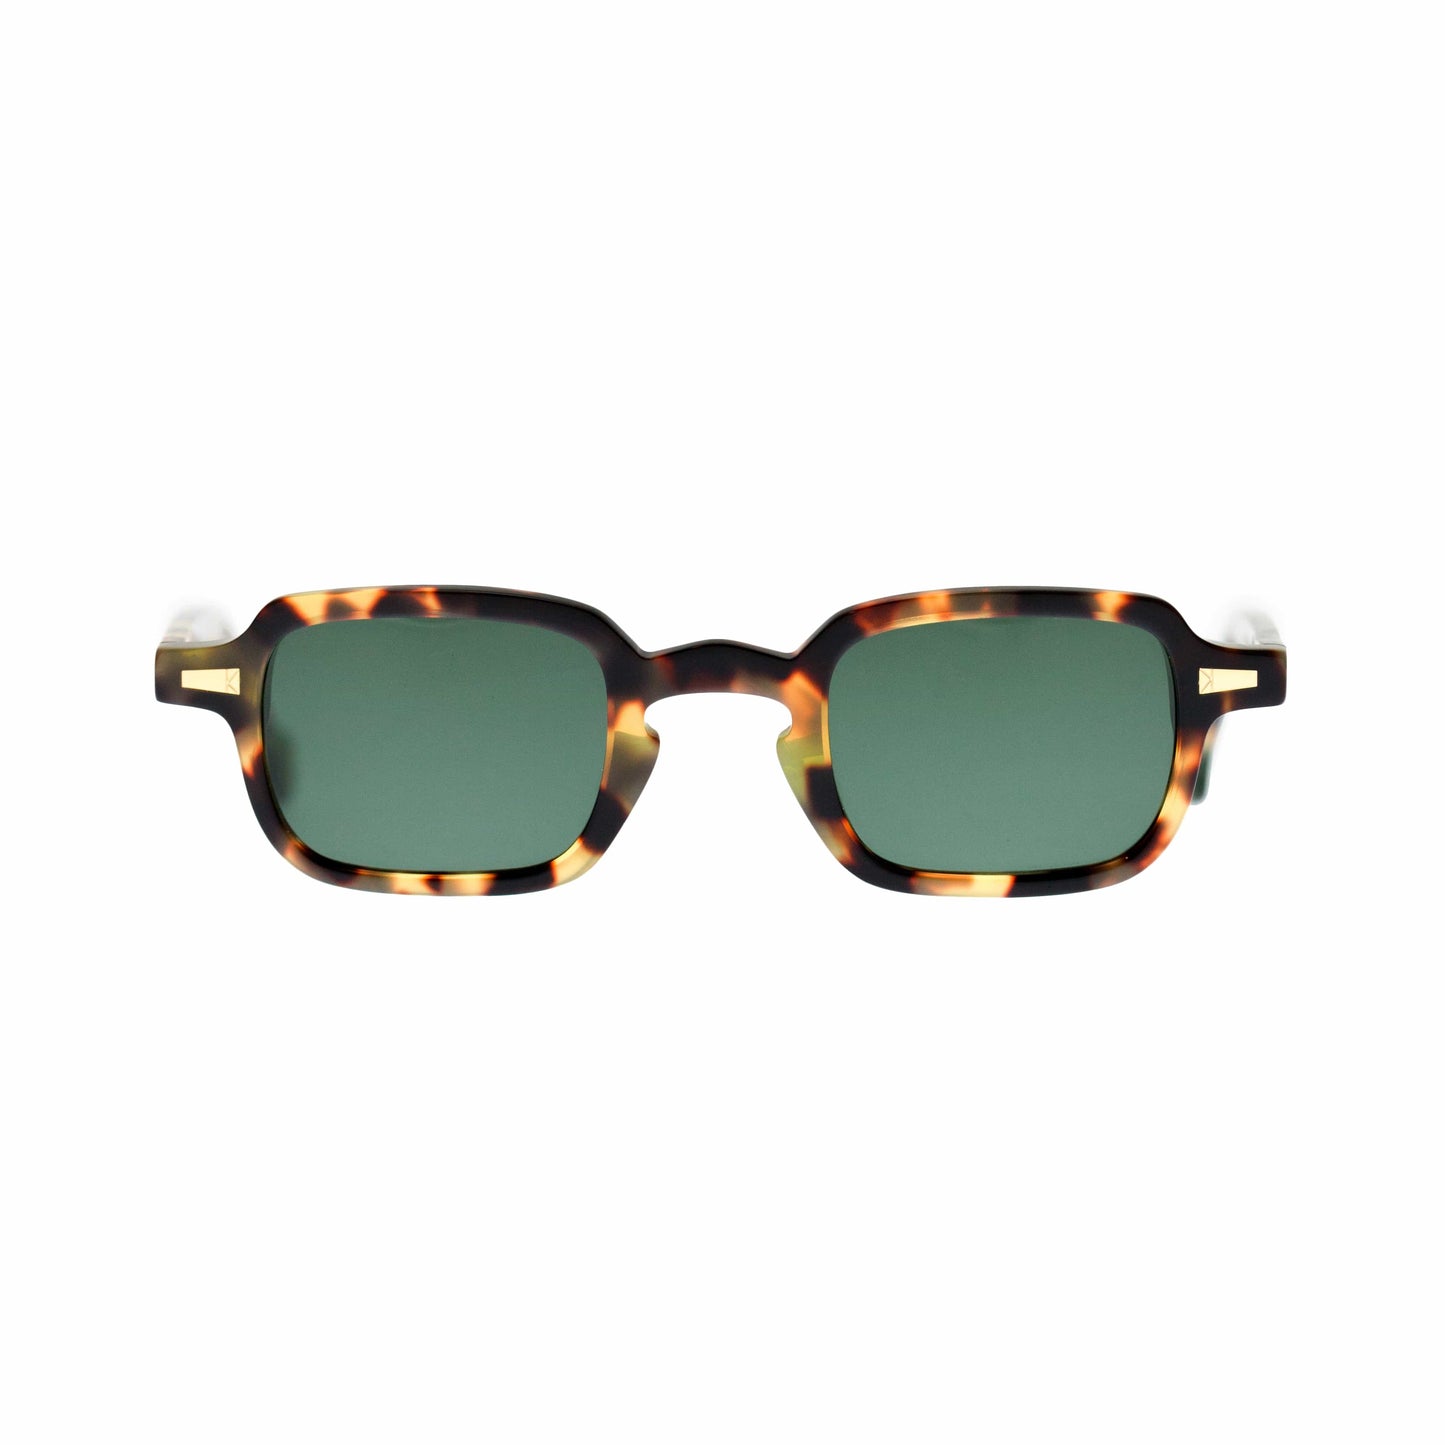 Kyme Occhiali da sole Tartaruga - lente verde Kyme Gigi: occhiale da sole rettangolare